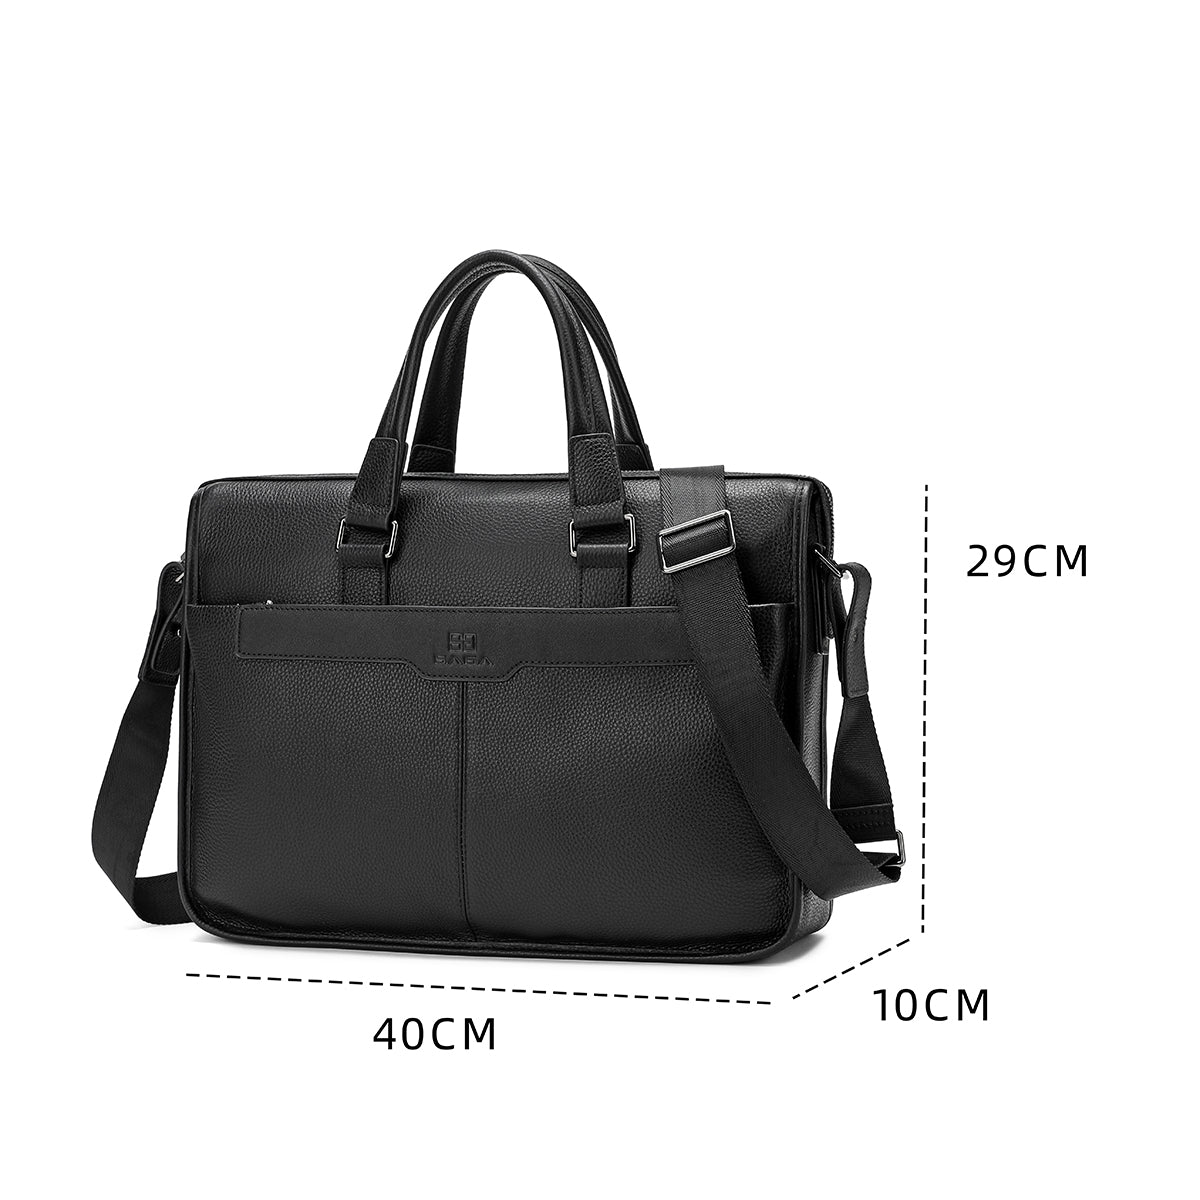 100% genuine leather laptop bag, high quality, black color